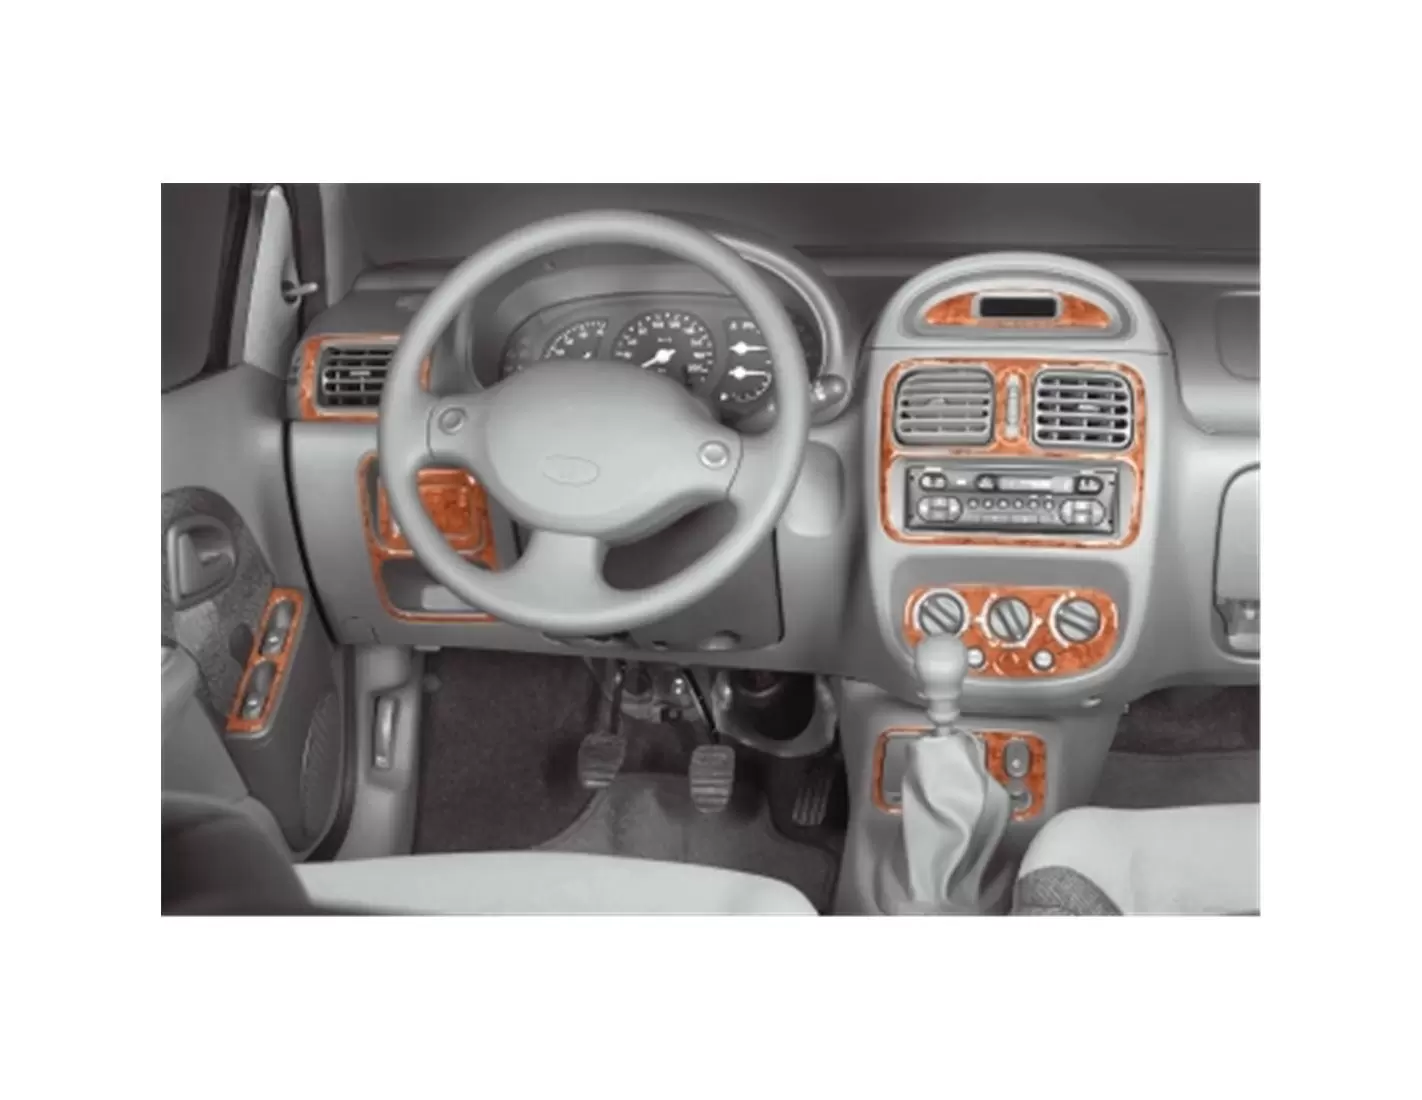 Renault Clio-4 09.2012 3D Interior Dashboard Trim Kit Dash Trim